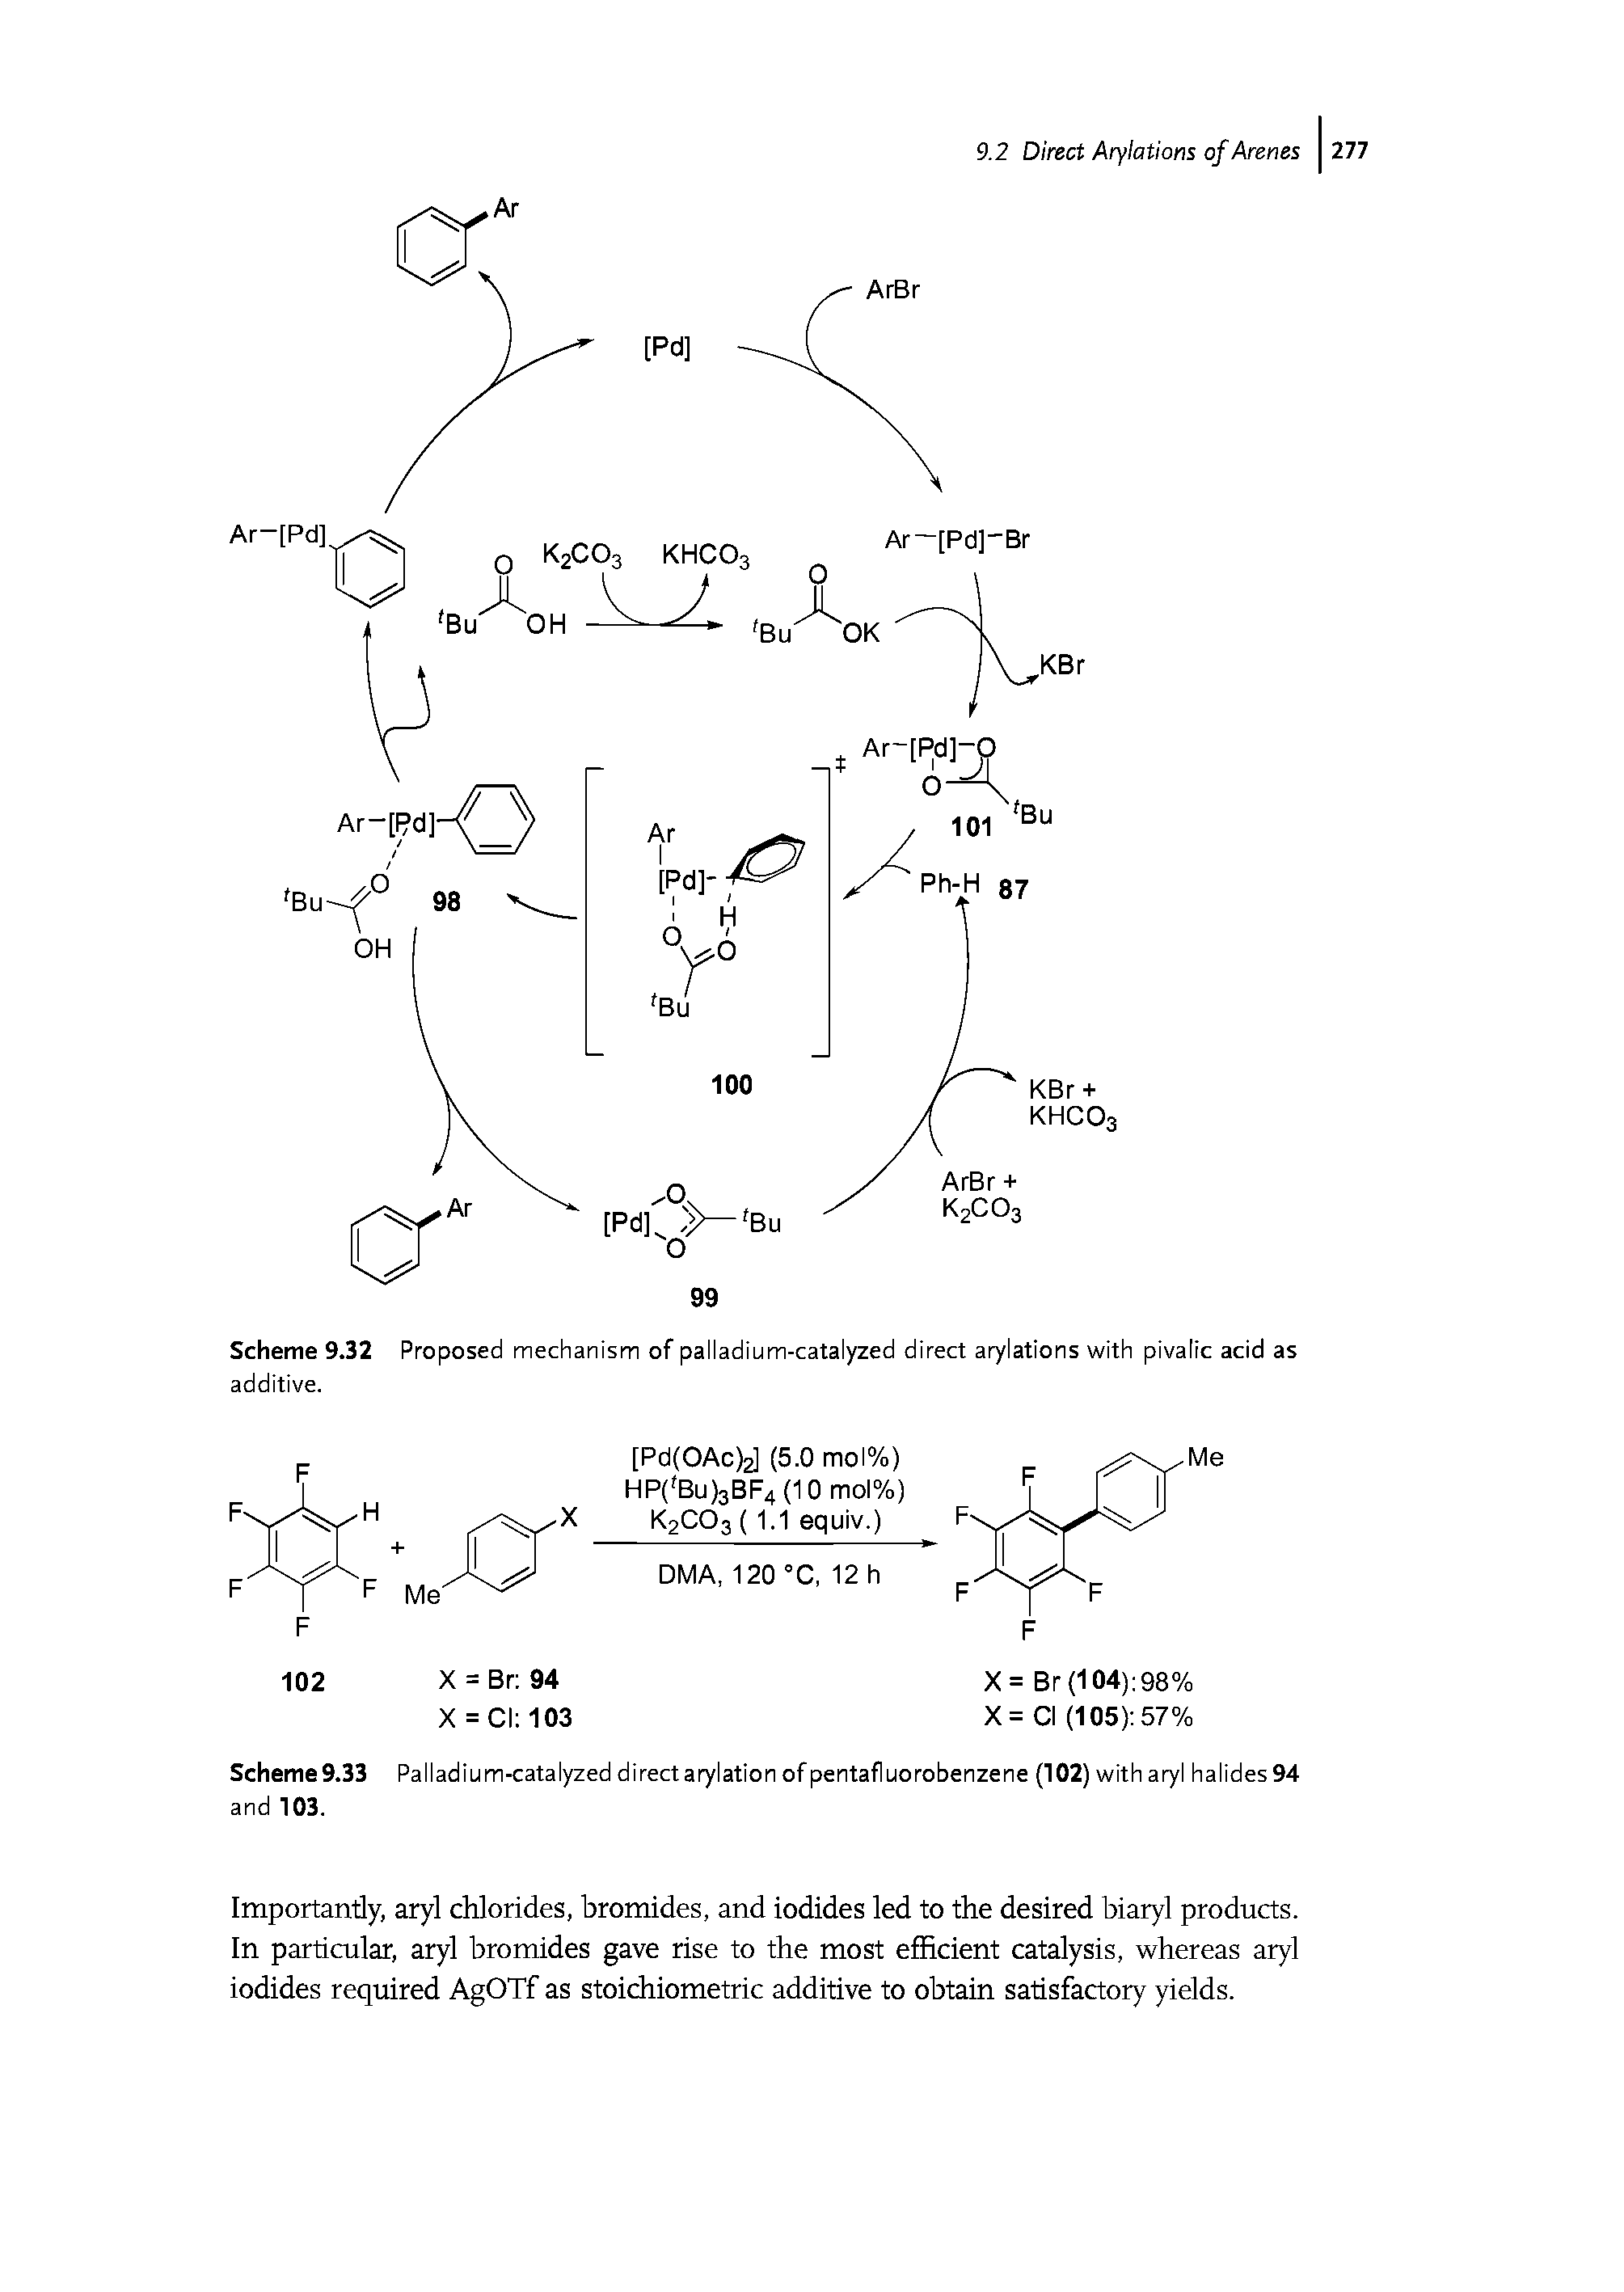 Scheme 9.32 Proposed mechanism of palladium-catalyzed direct arylations with pivalic acid as additive.